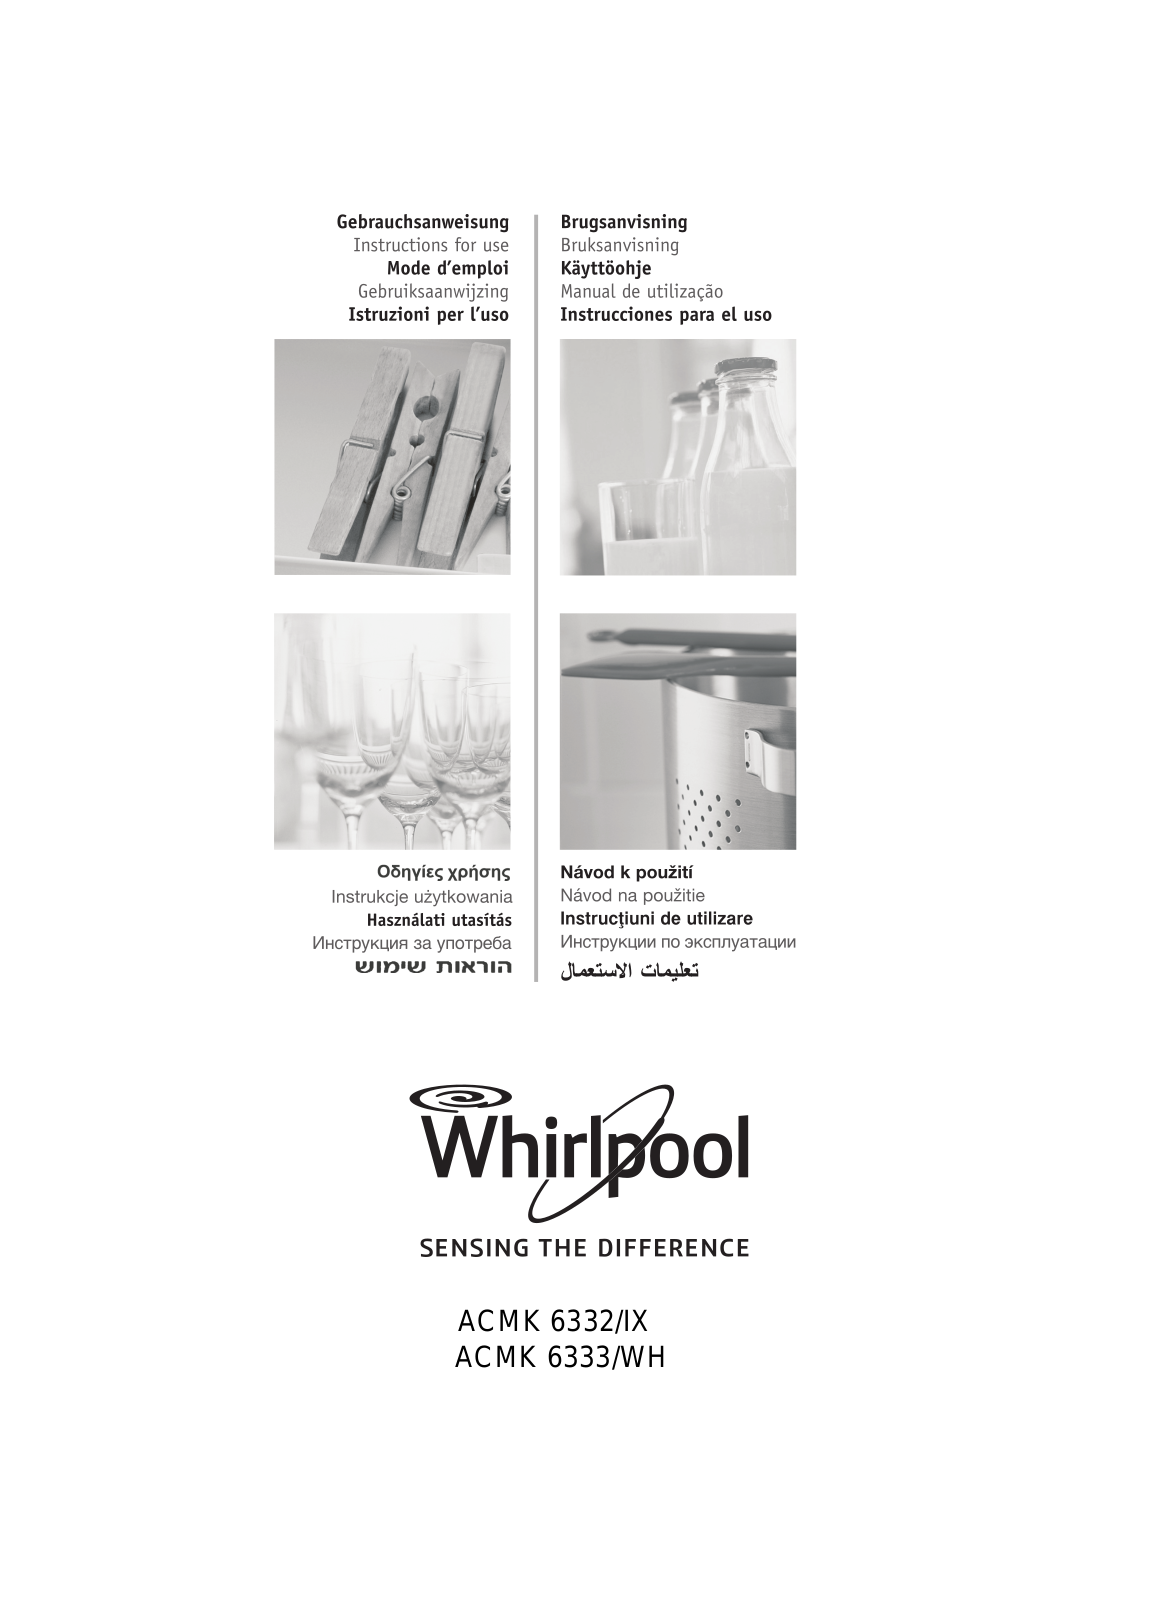 WHIRLPOOL ACMK 6332/IX User Manual